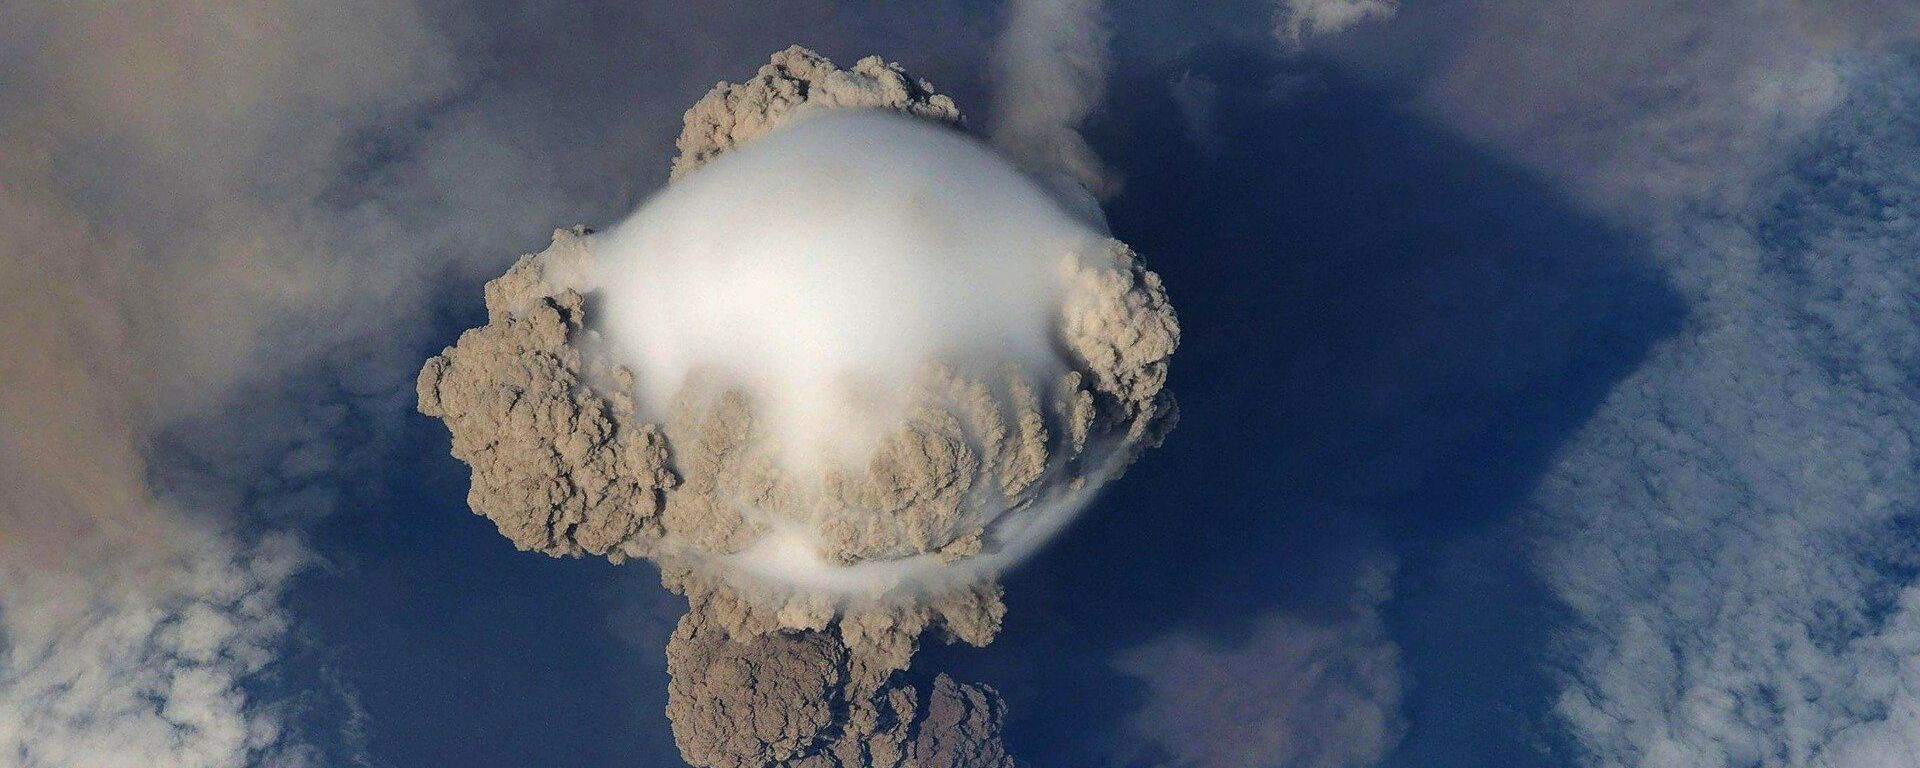 Erupción de un volcán (imagen referencial) - Sputnik Mundo, 1920, 26.05.2021